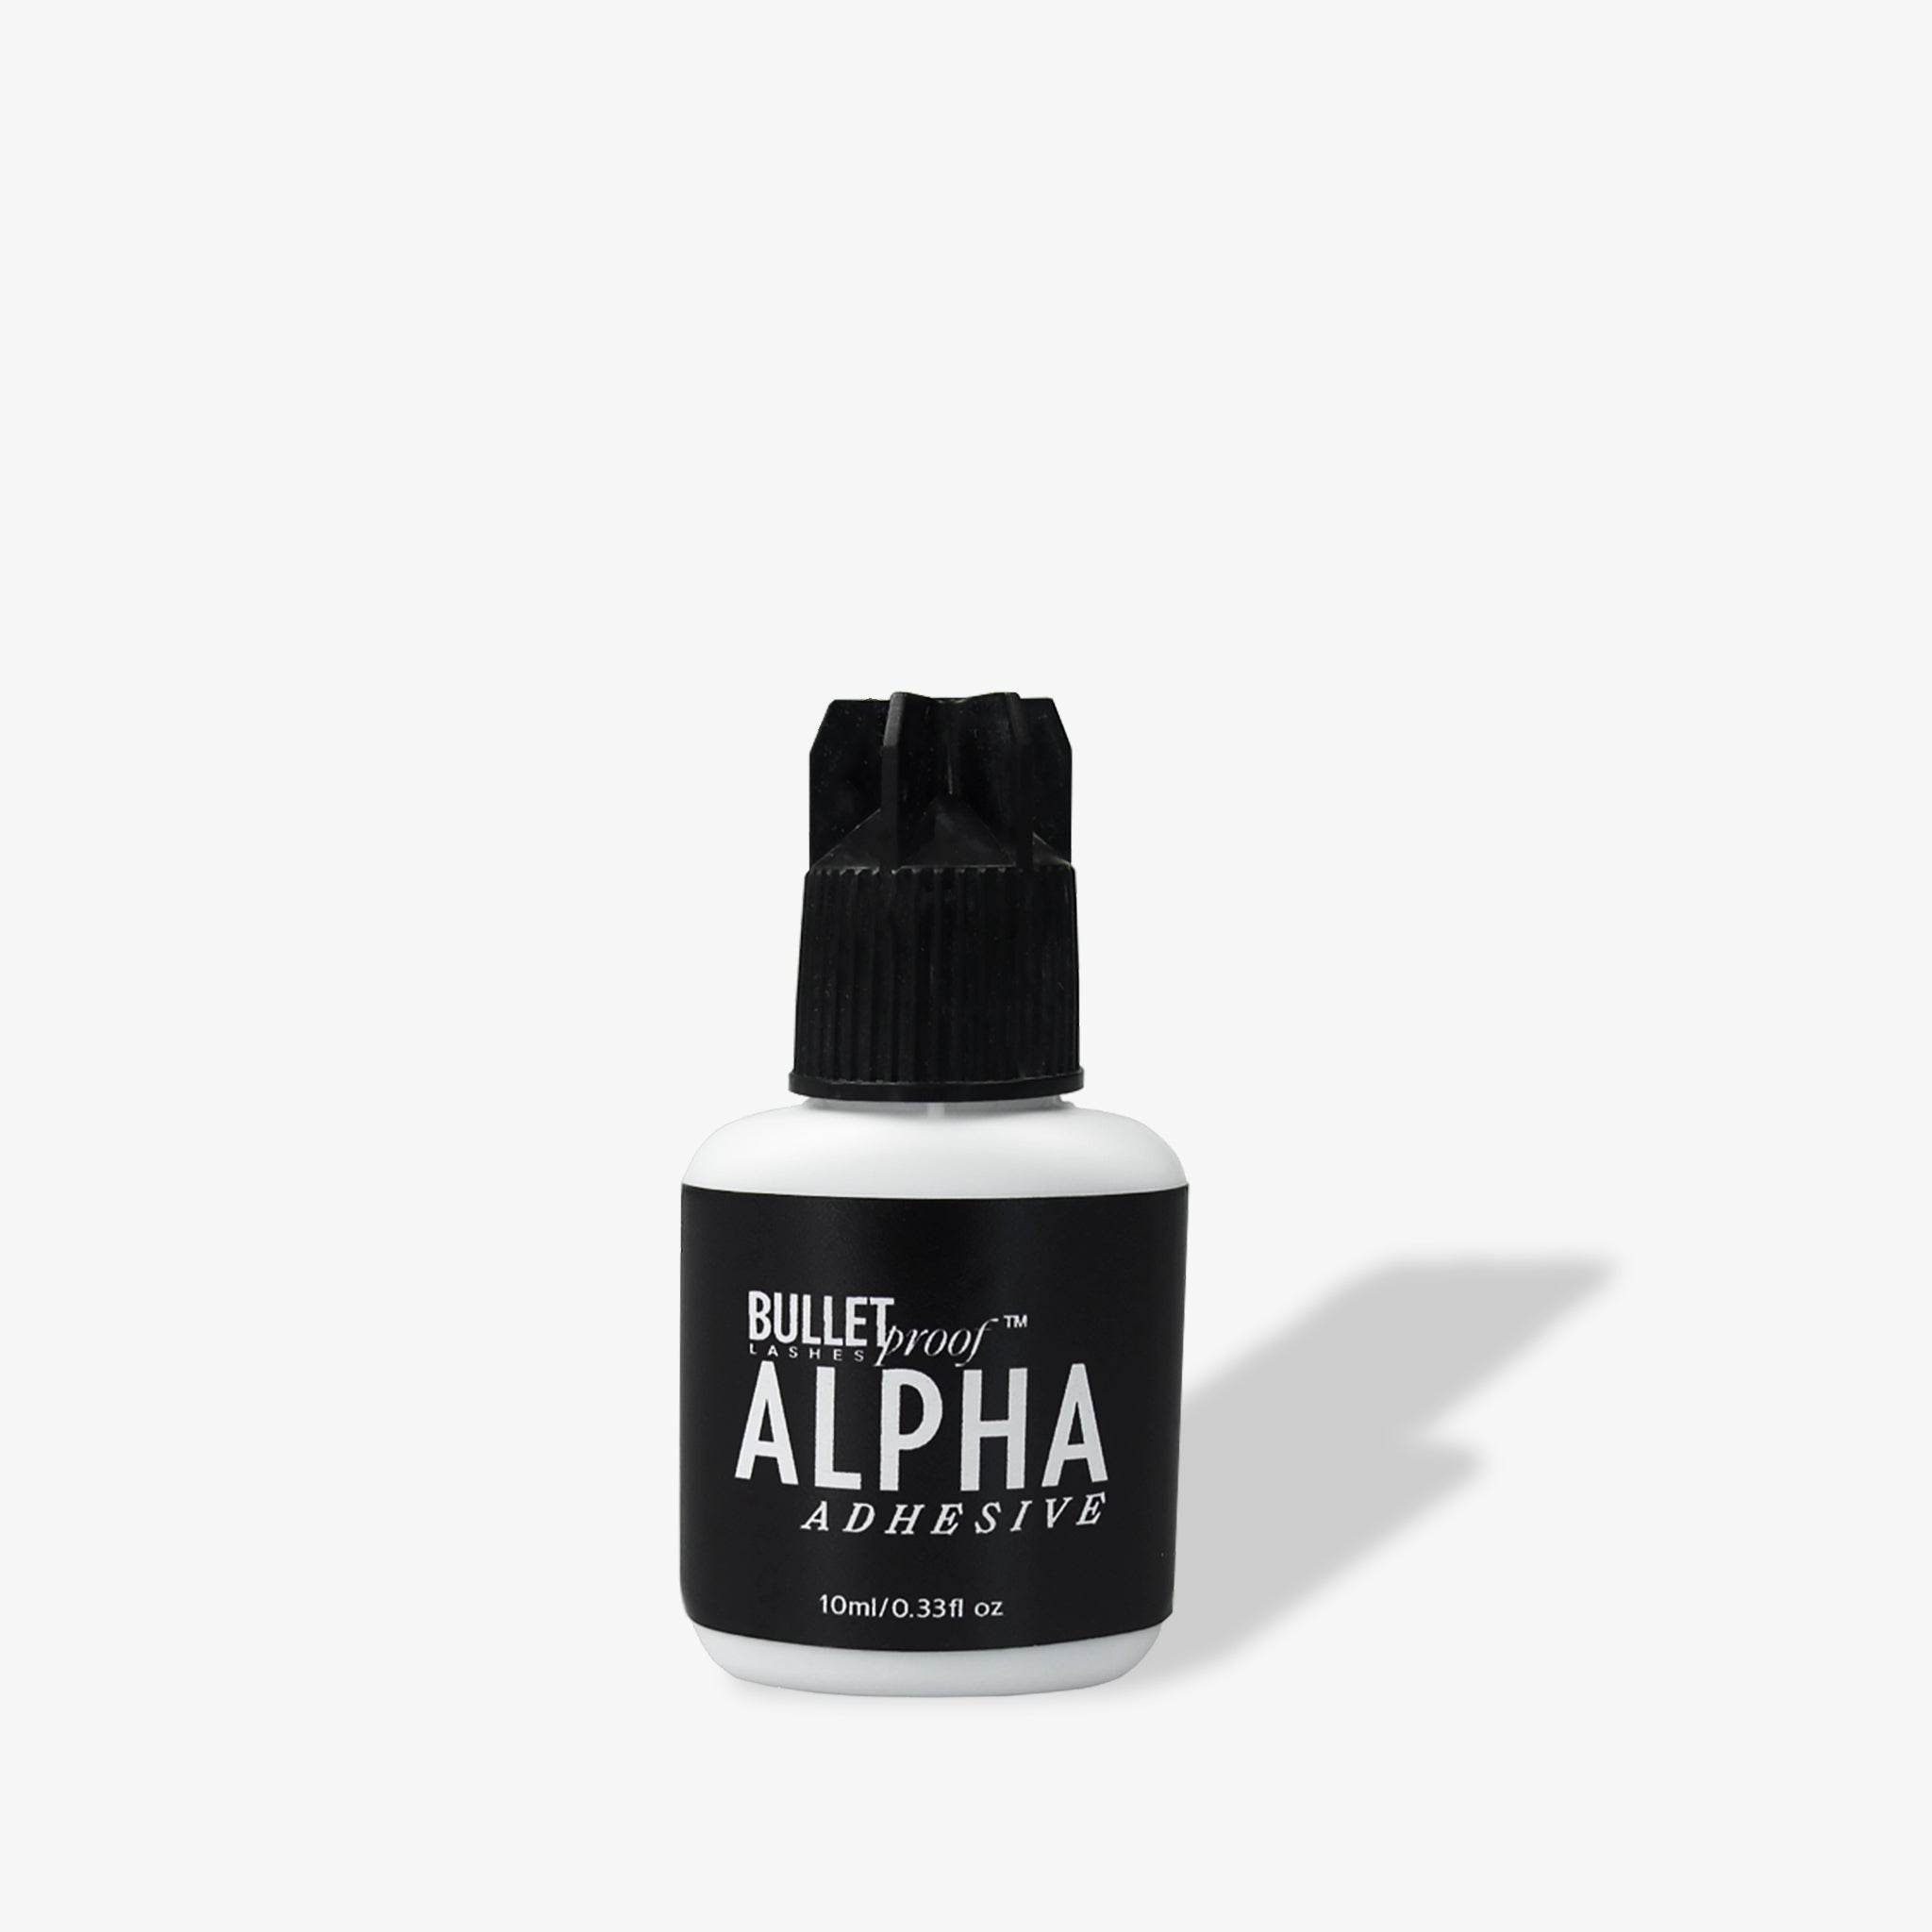 ALPHA Adhesive 10ml